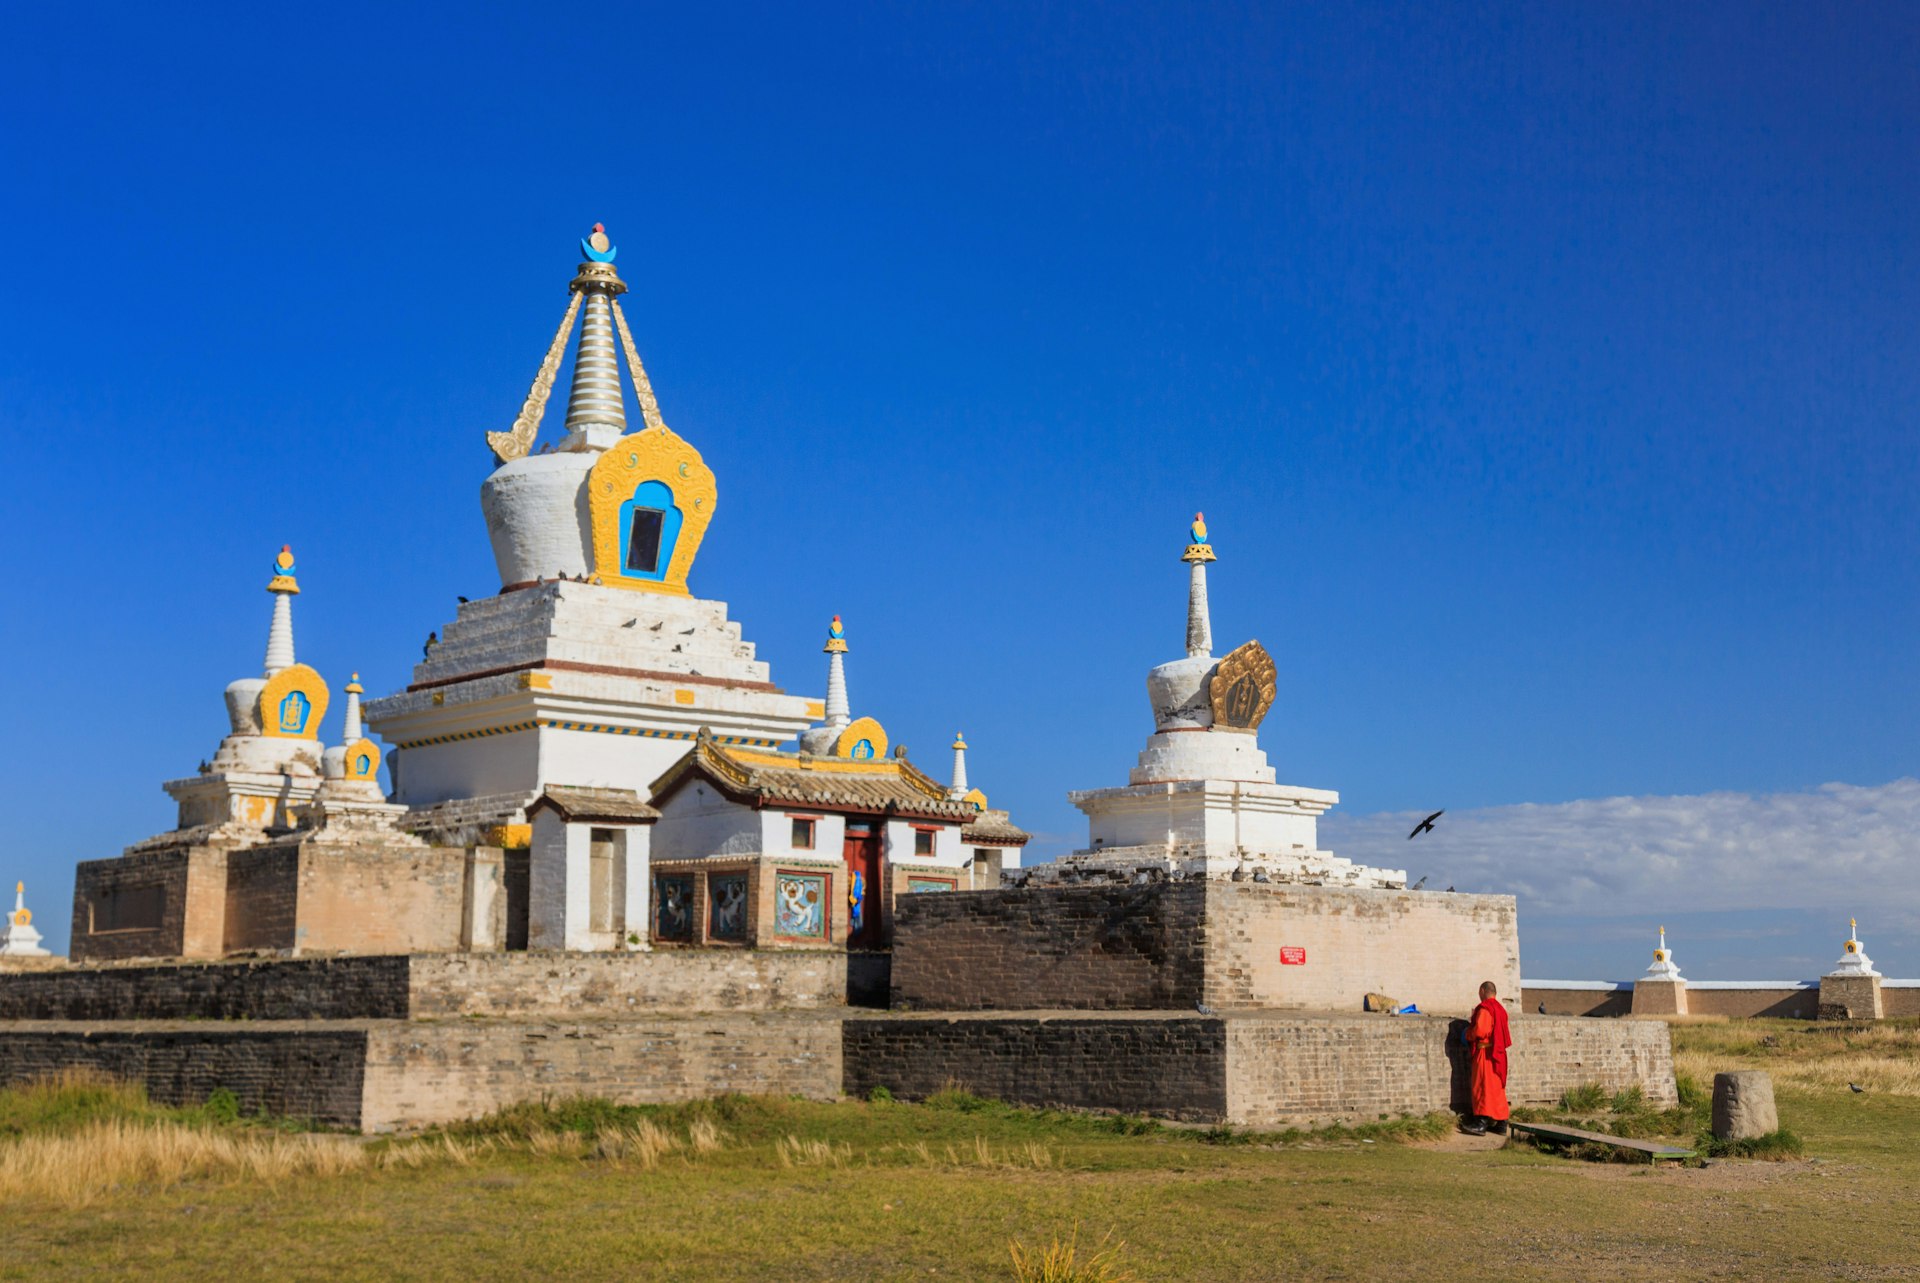 Monk by the stupa of Erdene Zuu monastery in the town of Kharkhorin, Mongolia